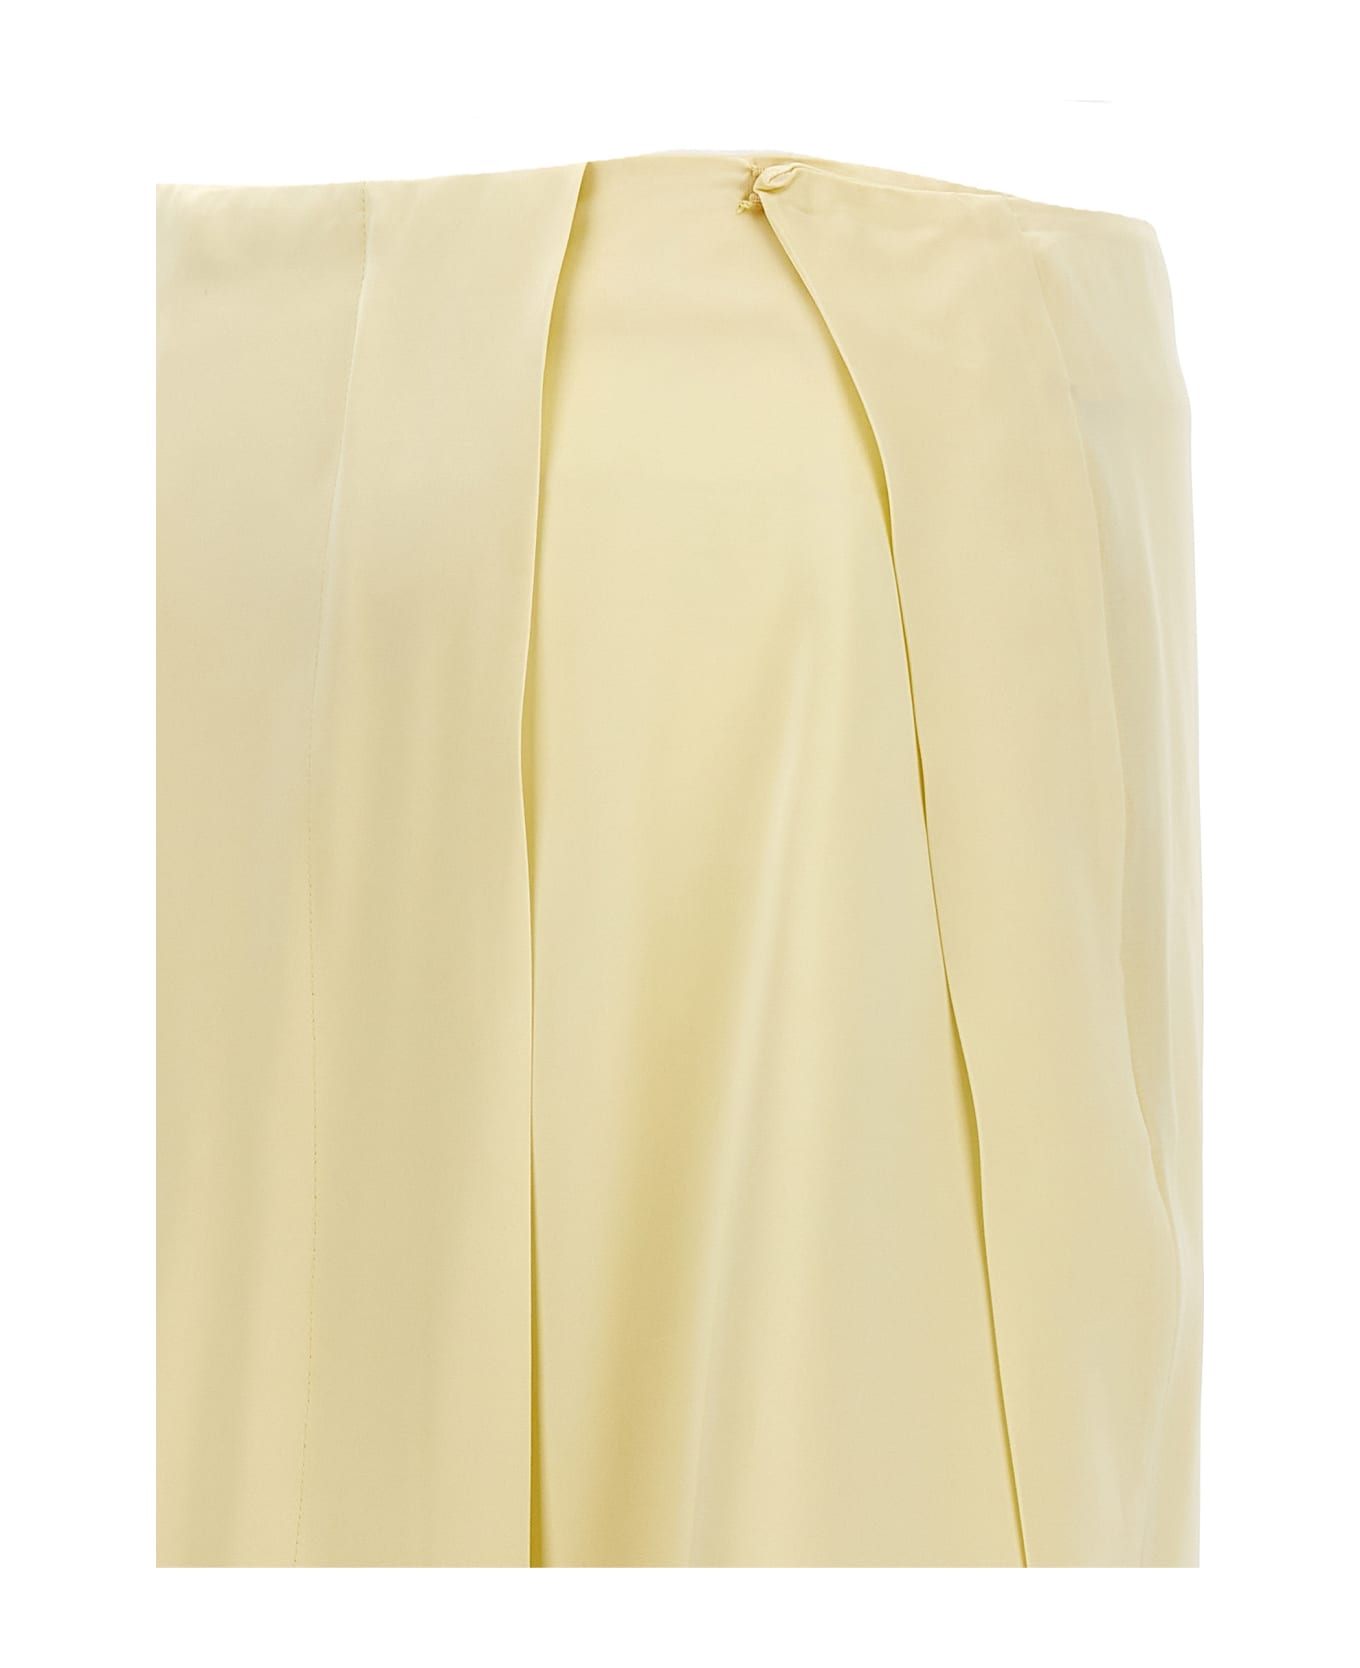 Jil Sander Satin Skirt With Side Slit - Yellow